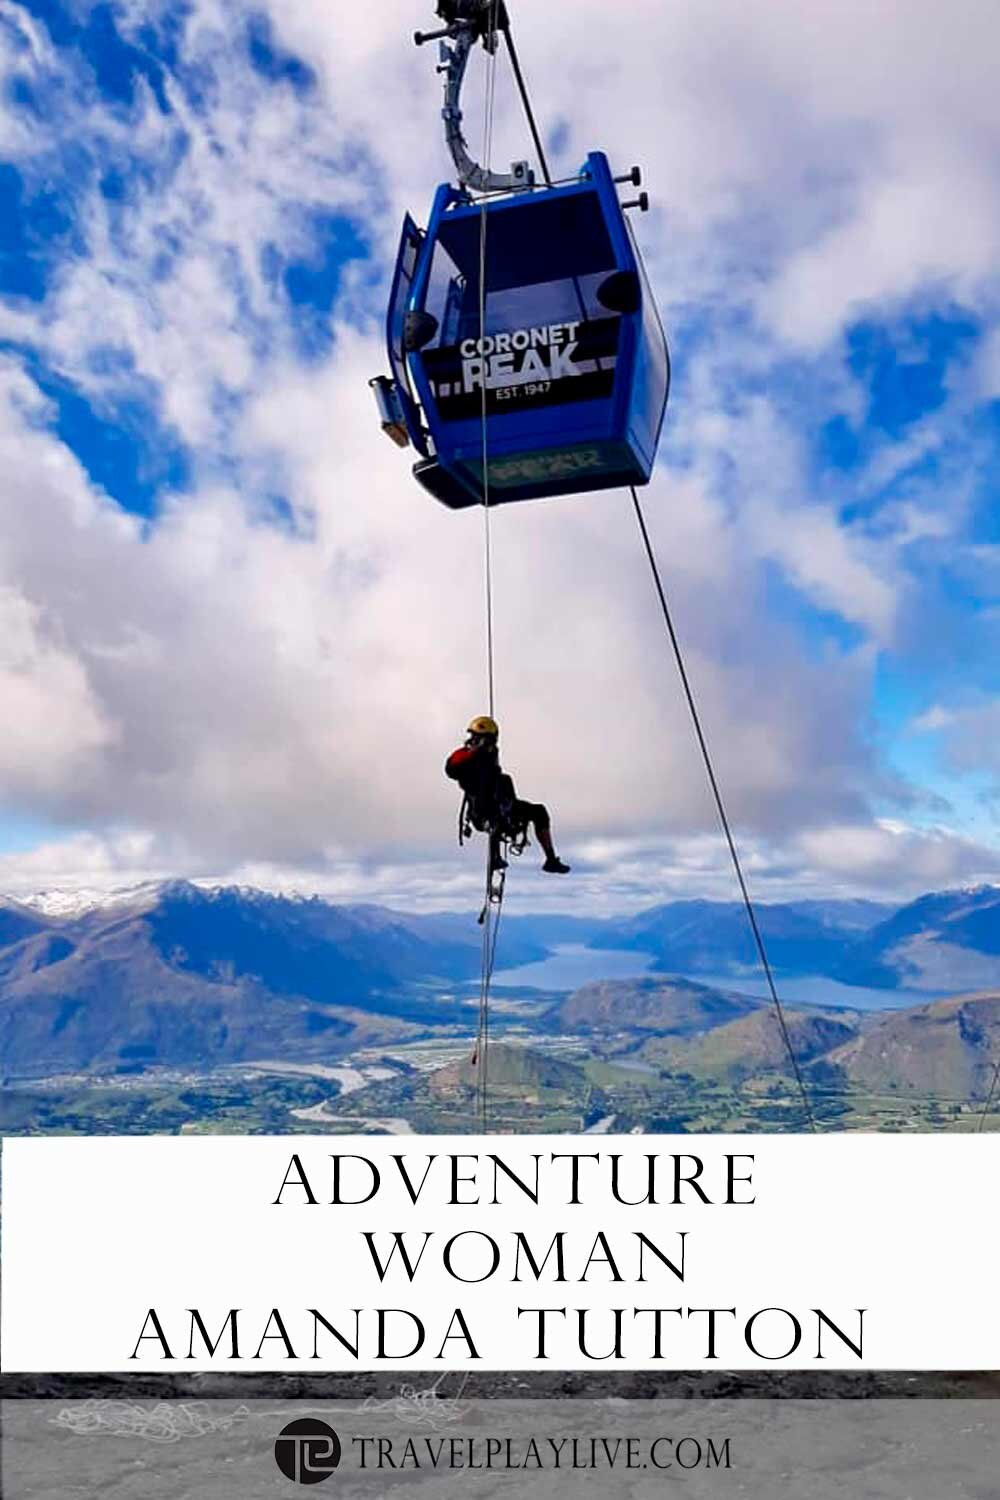 Amanda-Tutton-Active-Adventure-guide1.jpg